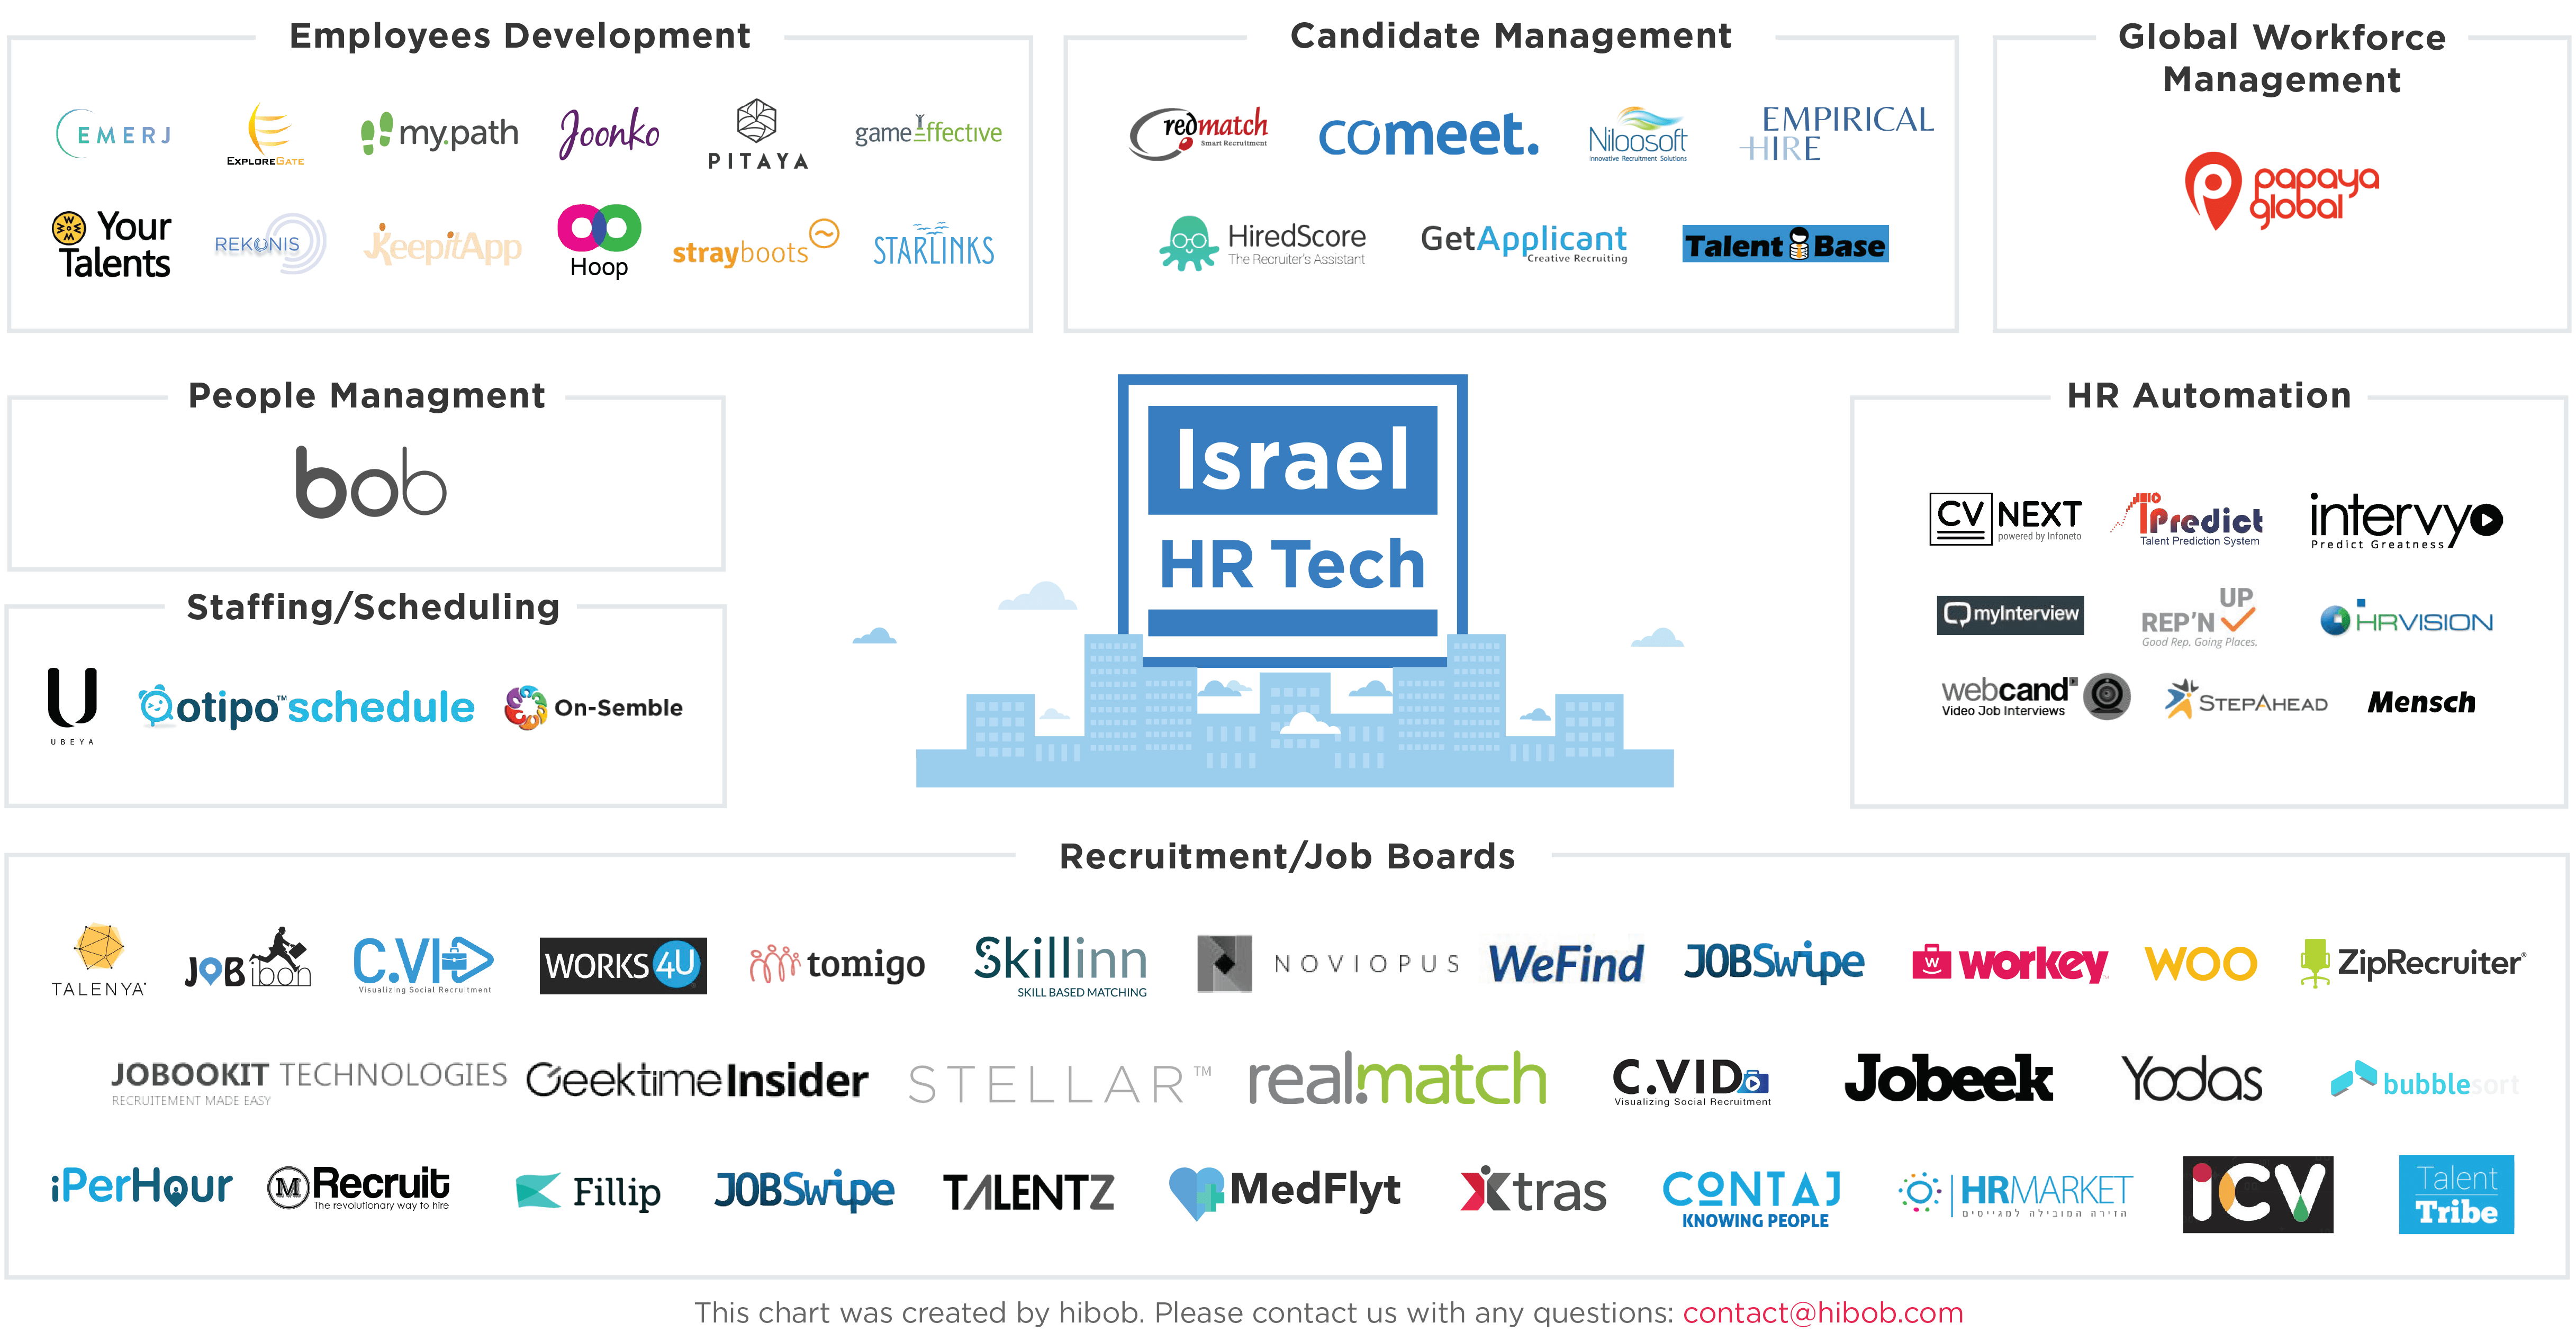 Israel HR Tech Tree Map